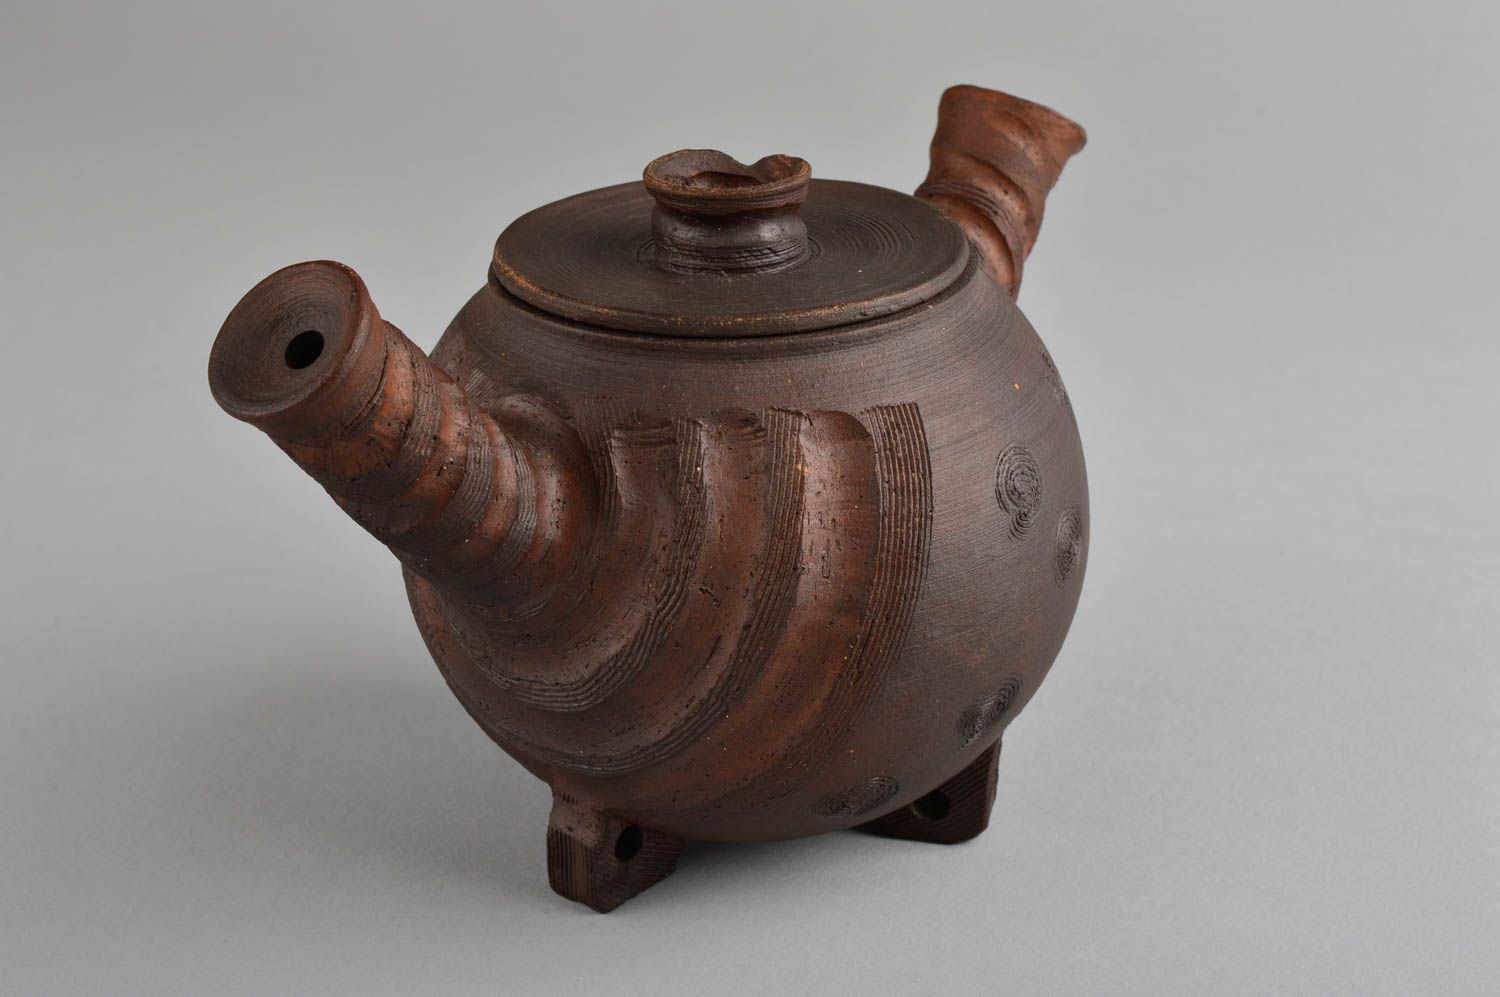 Handmade ceramic teapot small teapot pottery art ceramic cookware kitchen decor photo 3